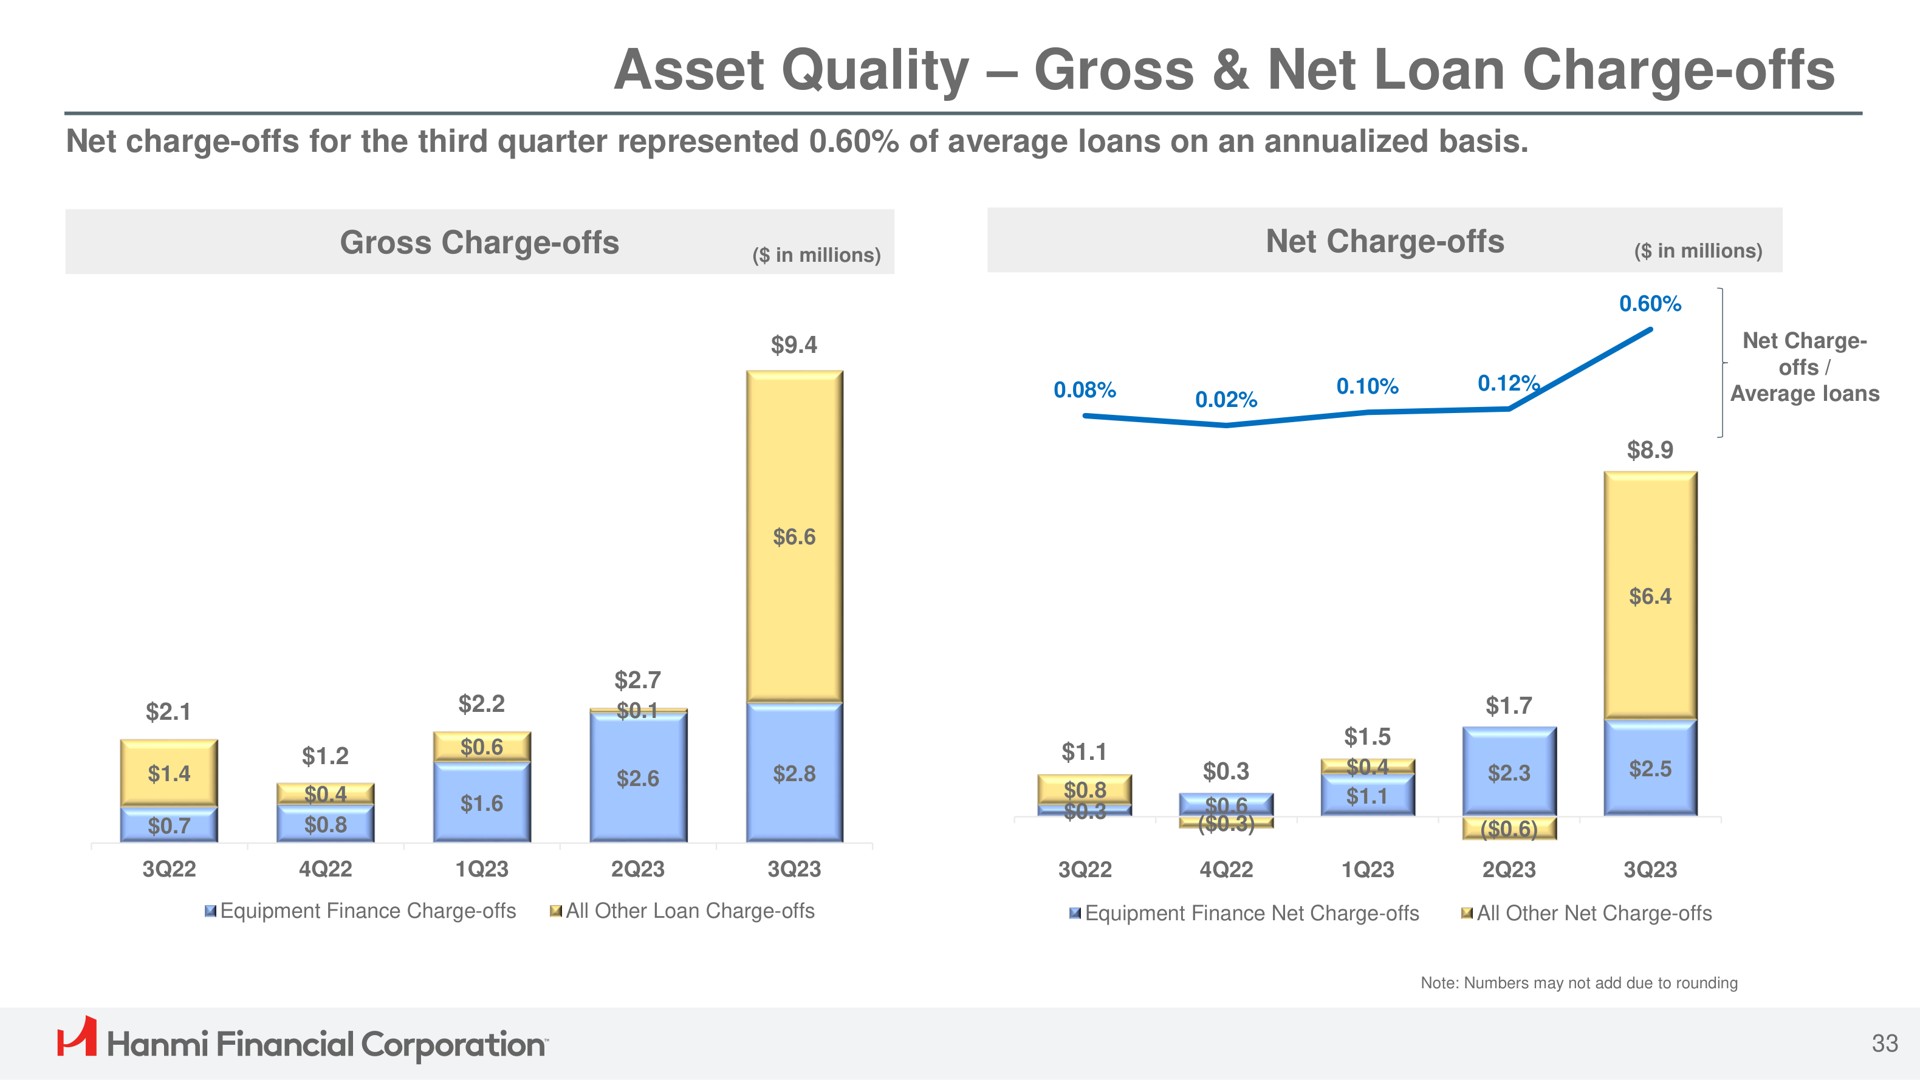 asset quality gross net loan charge offs in millions in millions financial corporation | Hanmi Financial